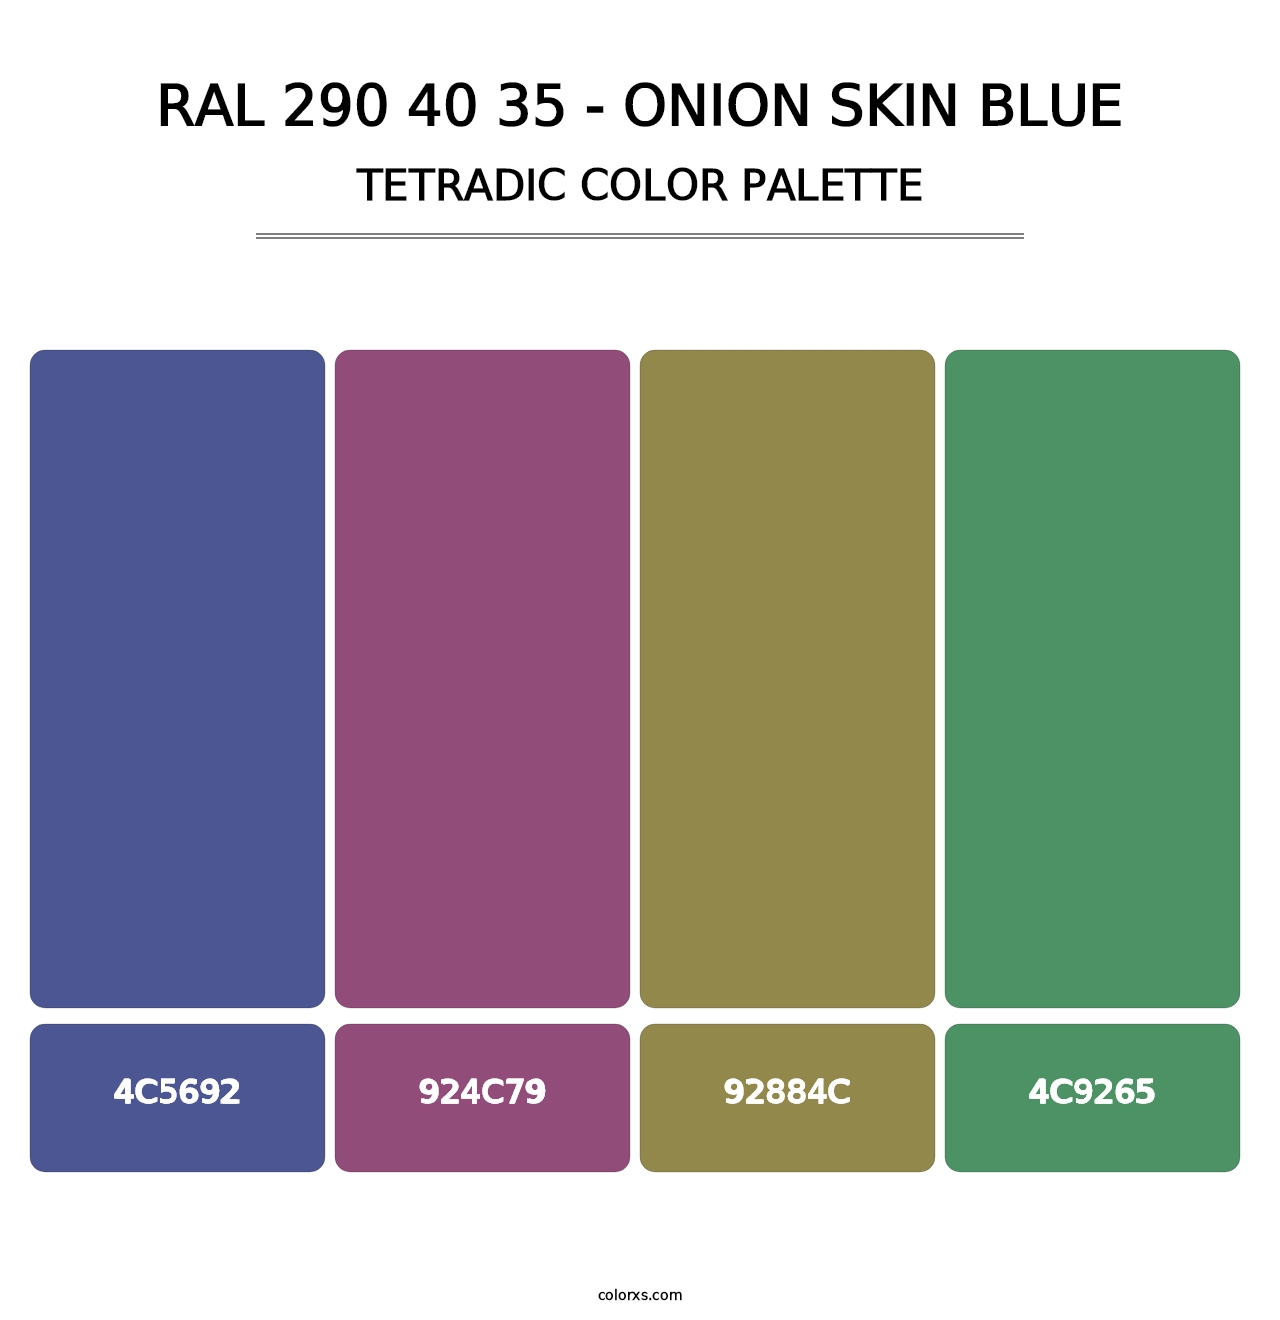 RAL 290 40 35 - Onion Skin Blue - Tetradic Color Palette